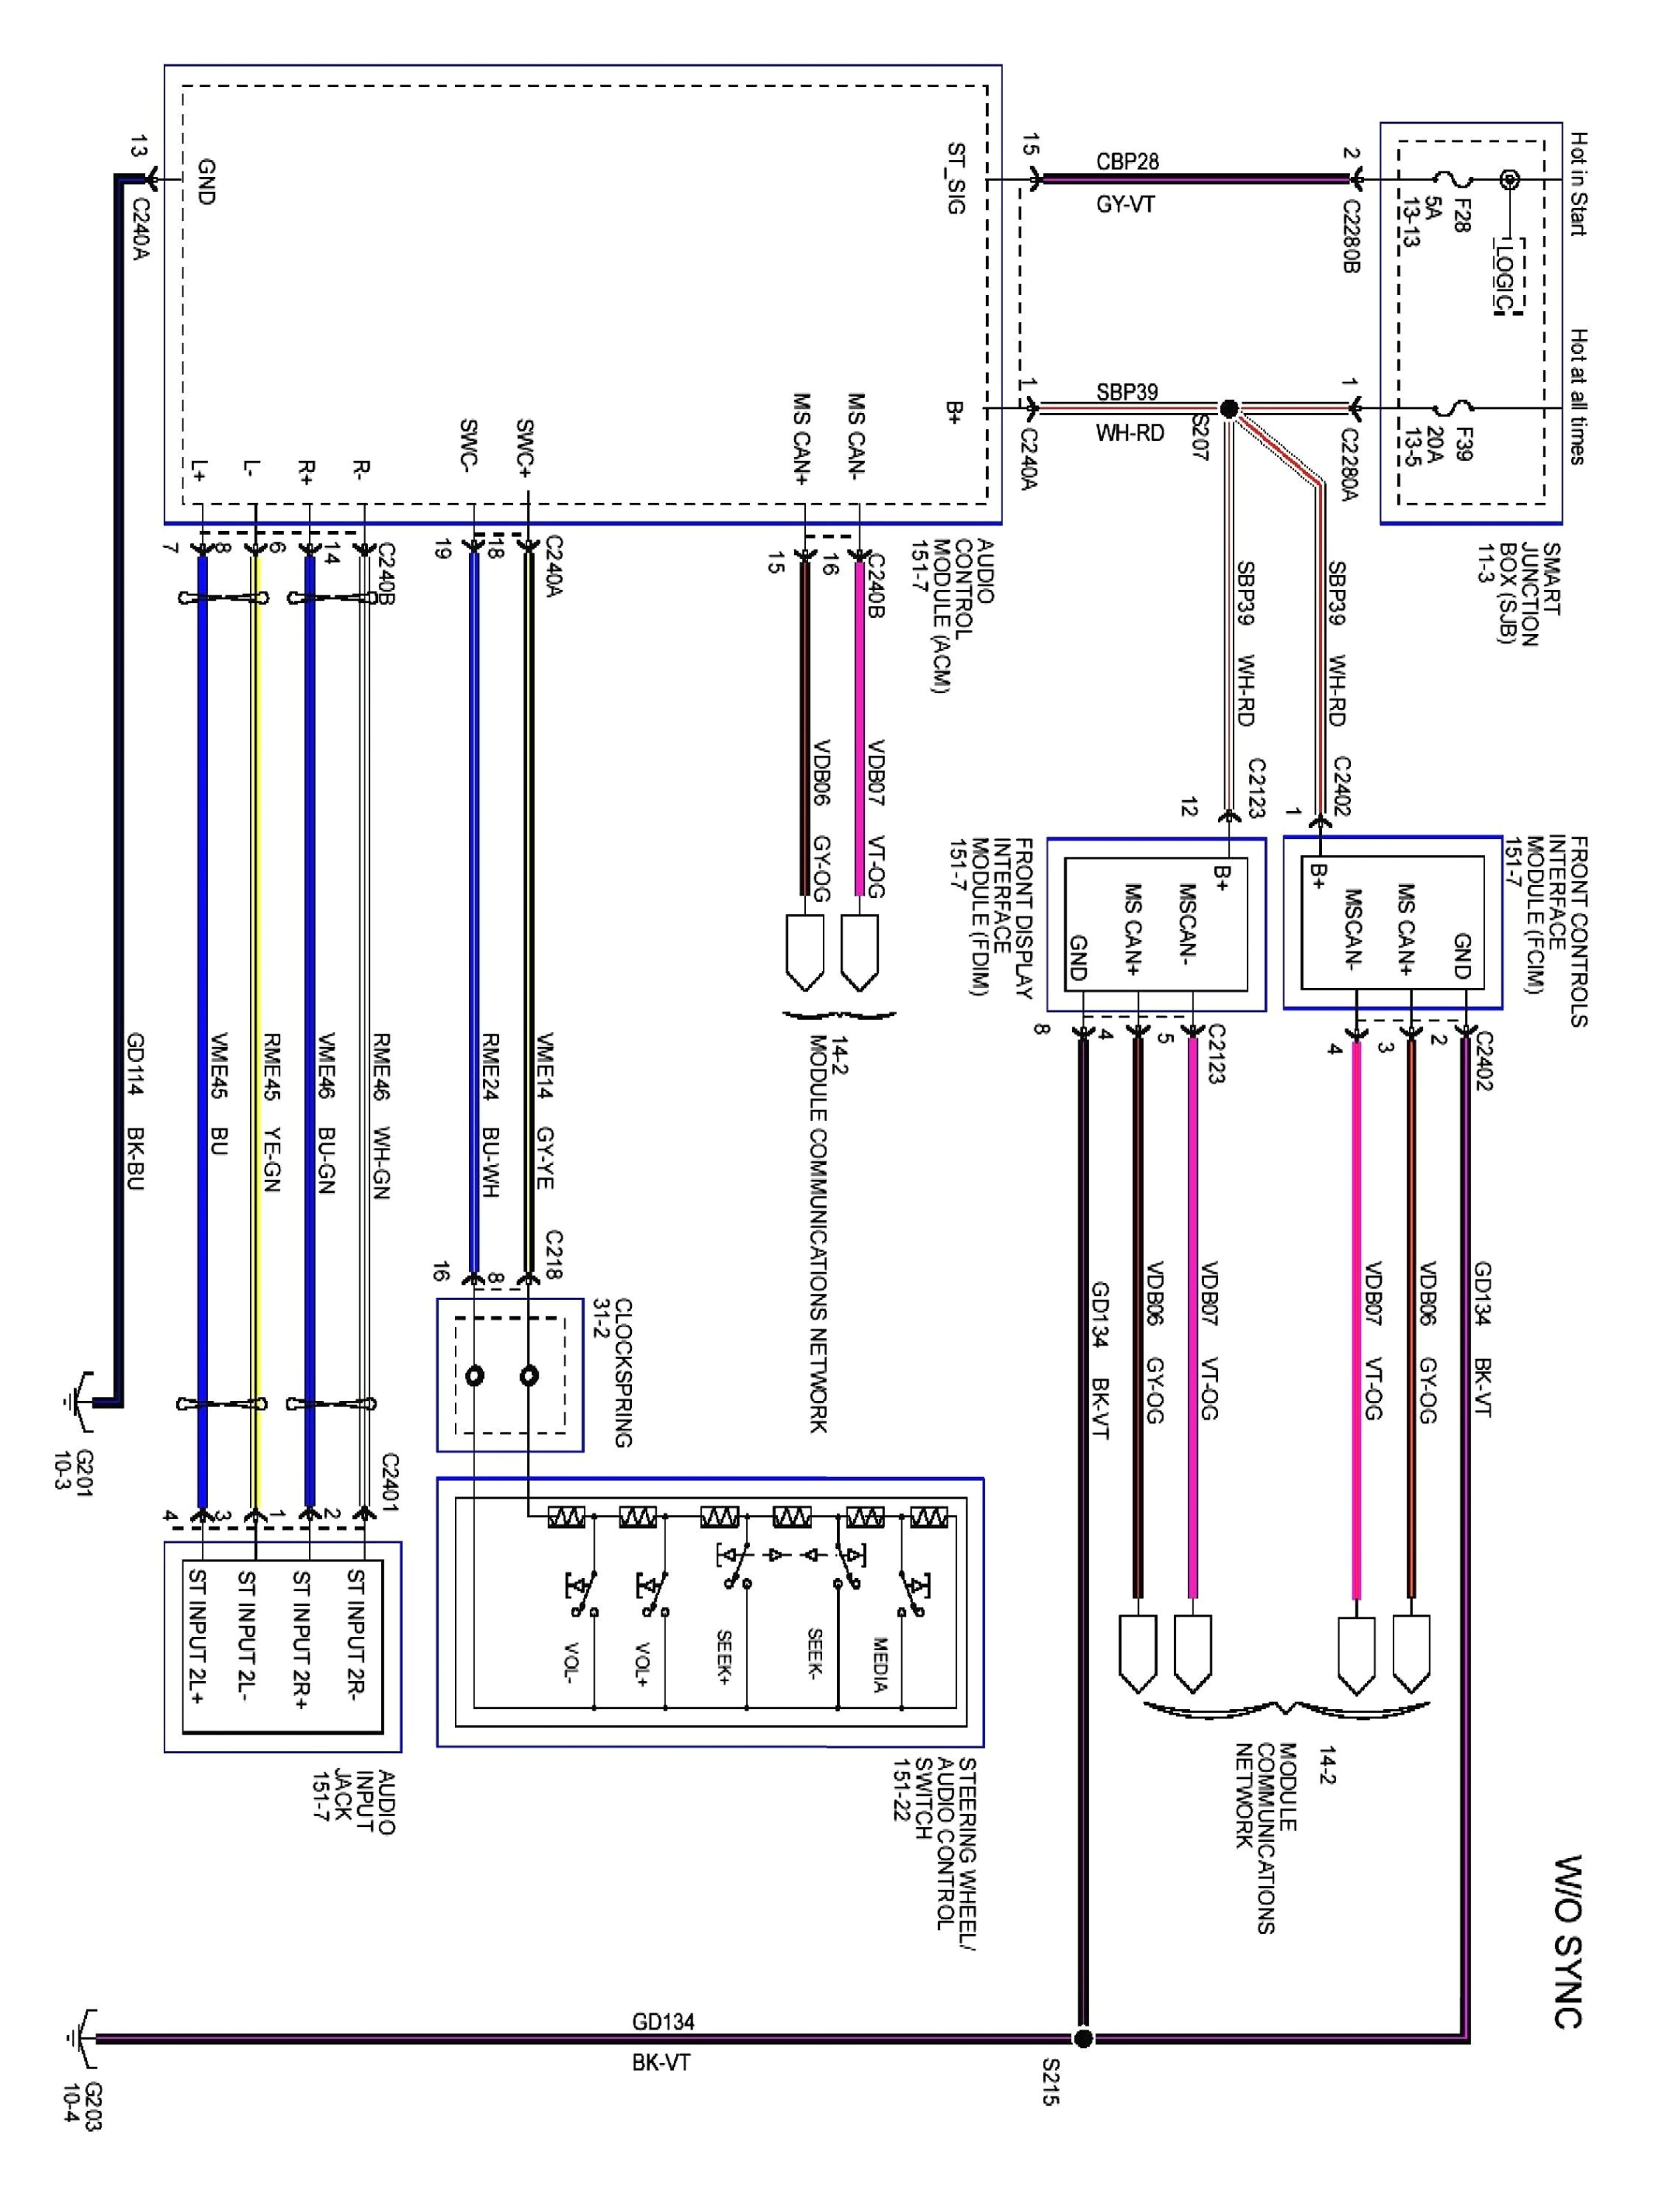 2004 bmw x3 wiring diagram wiring diagram name 2004 bmw x3 audio wiring diagram 2004 bmw x3 wiring diagram